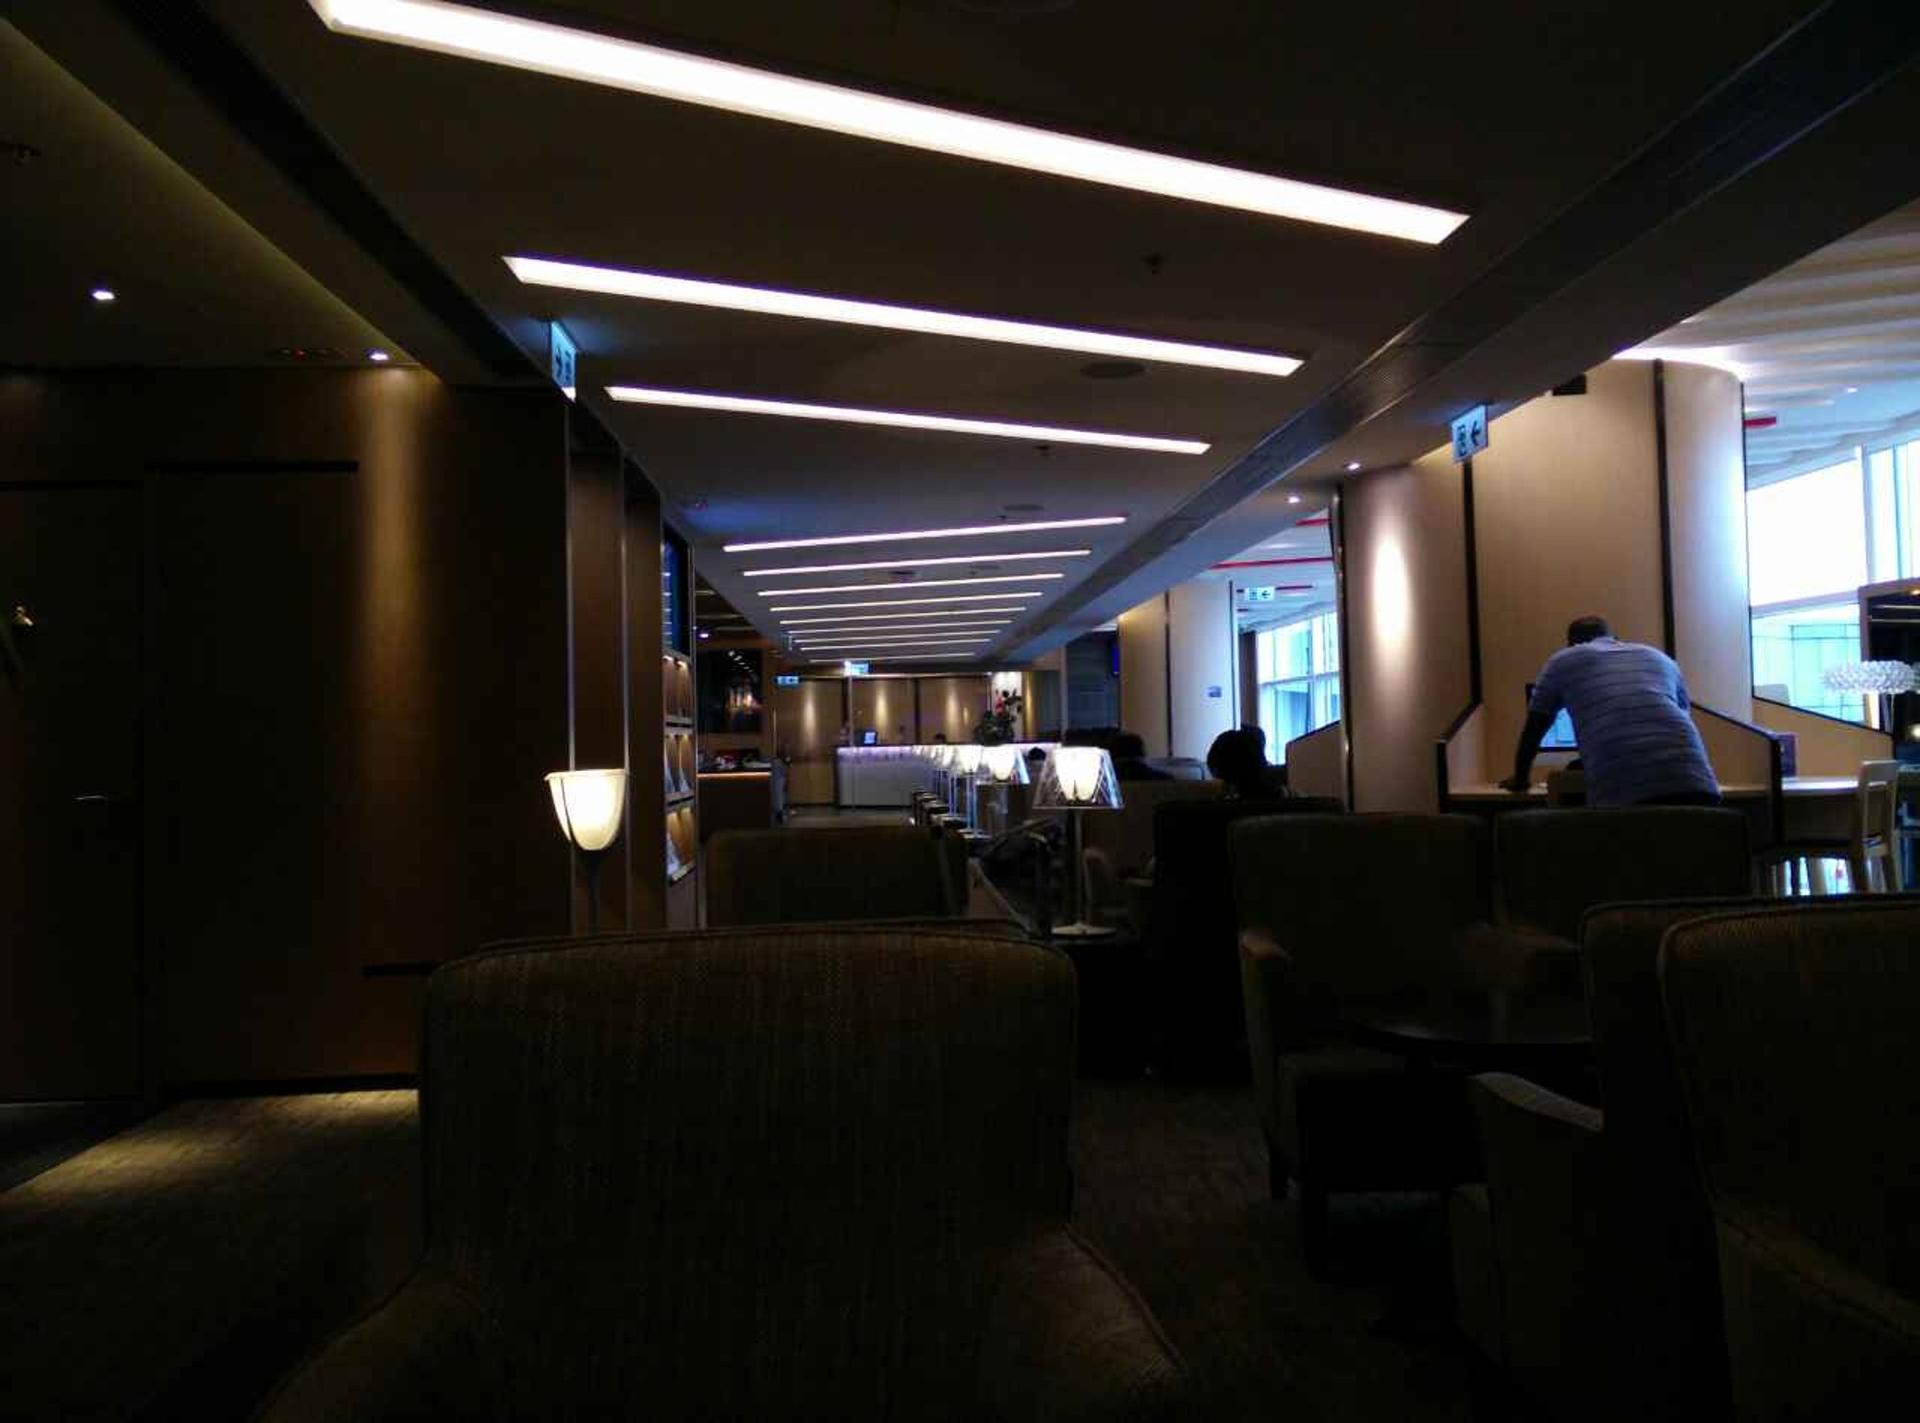 Hong Kong Airlines VIP Lounge (Club Bauhinia) image 1 of 40